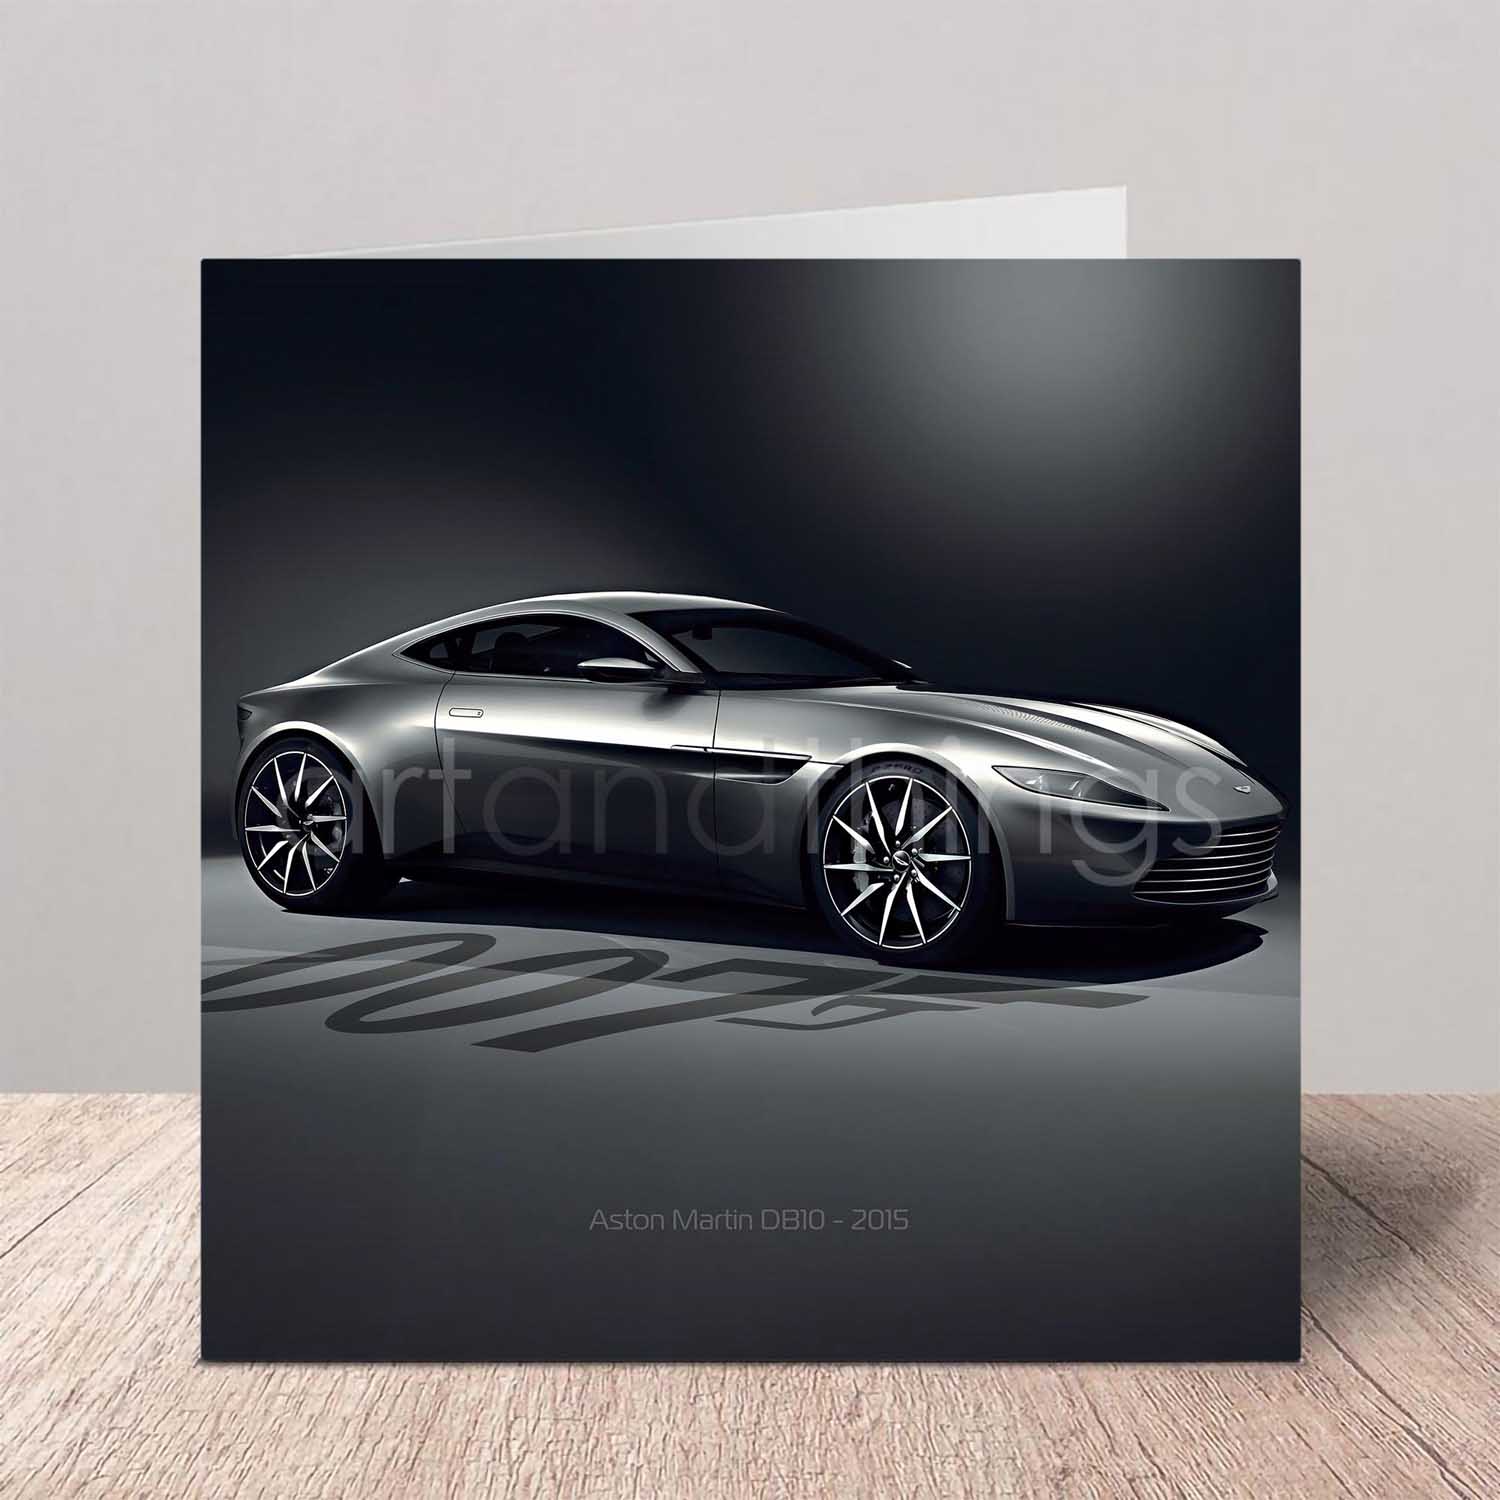 James Bond Aston Martin DB10 Greeting Card